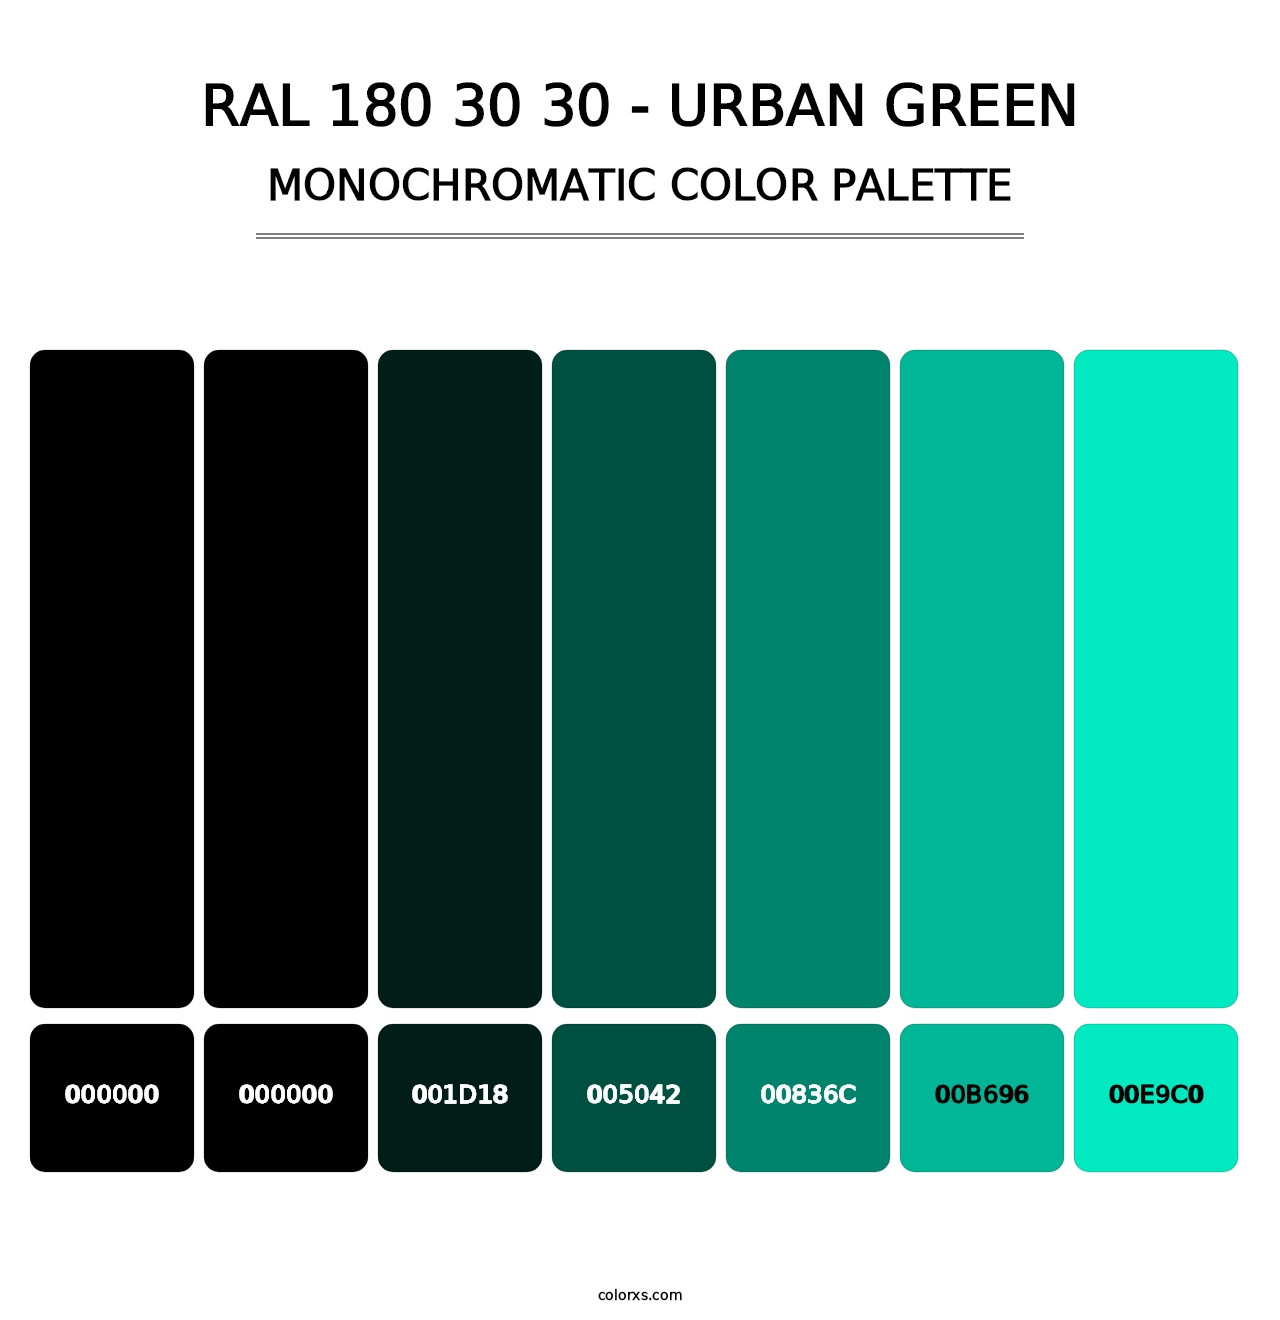 RAL 180 30 30 - Urban Green - Monochromatic Color Palette